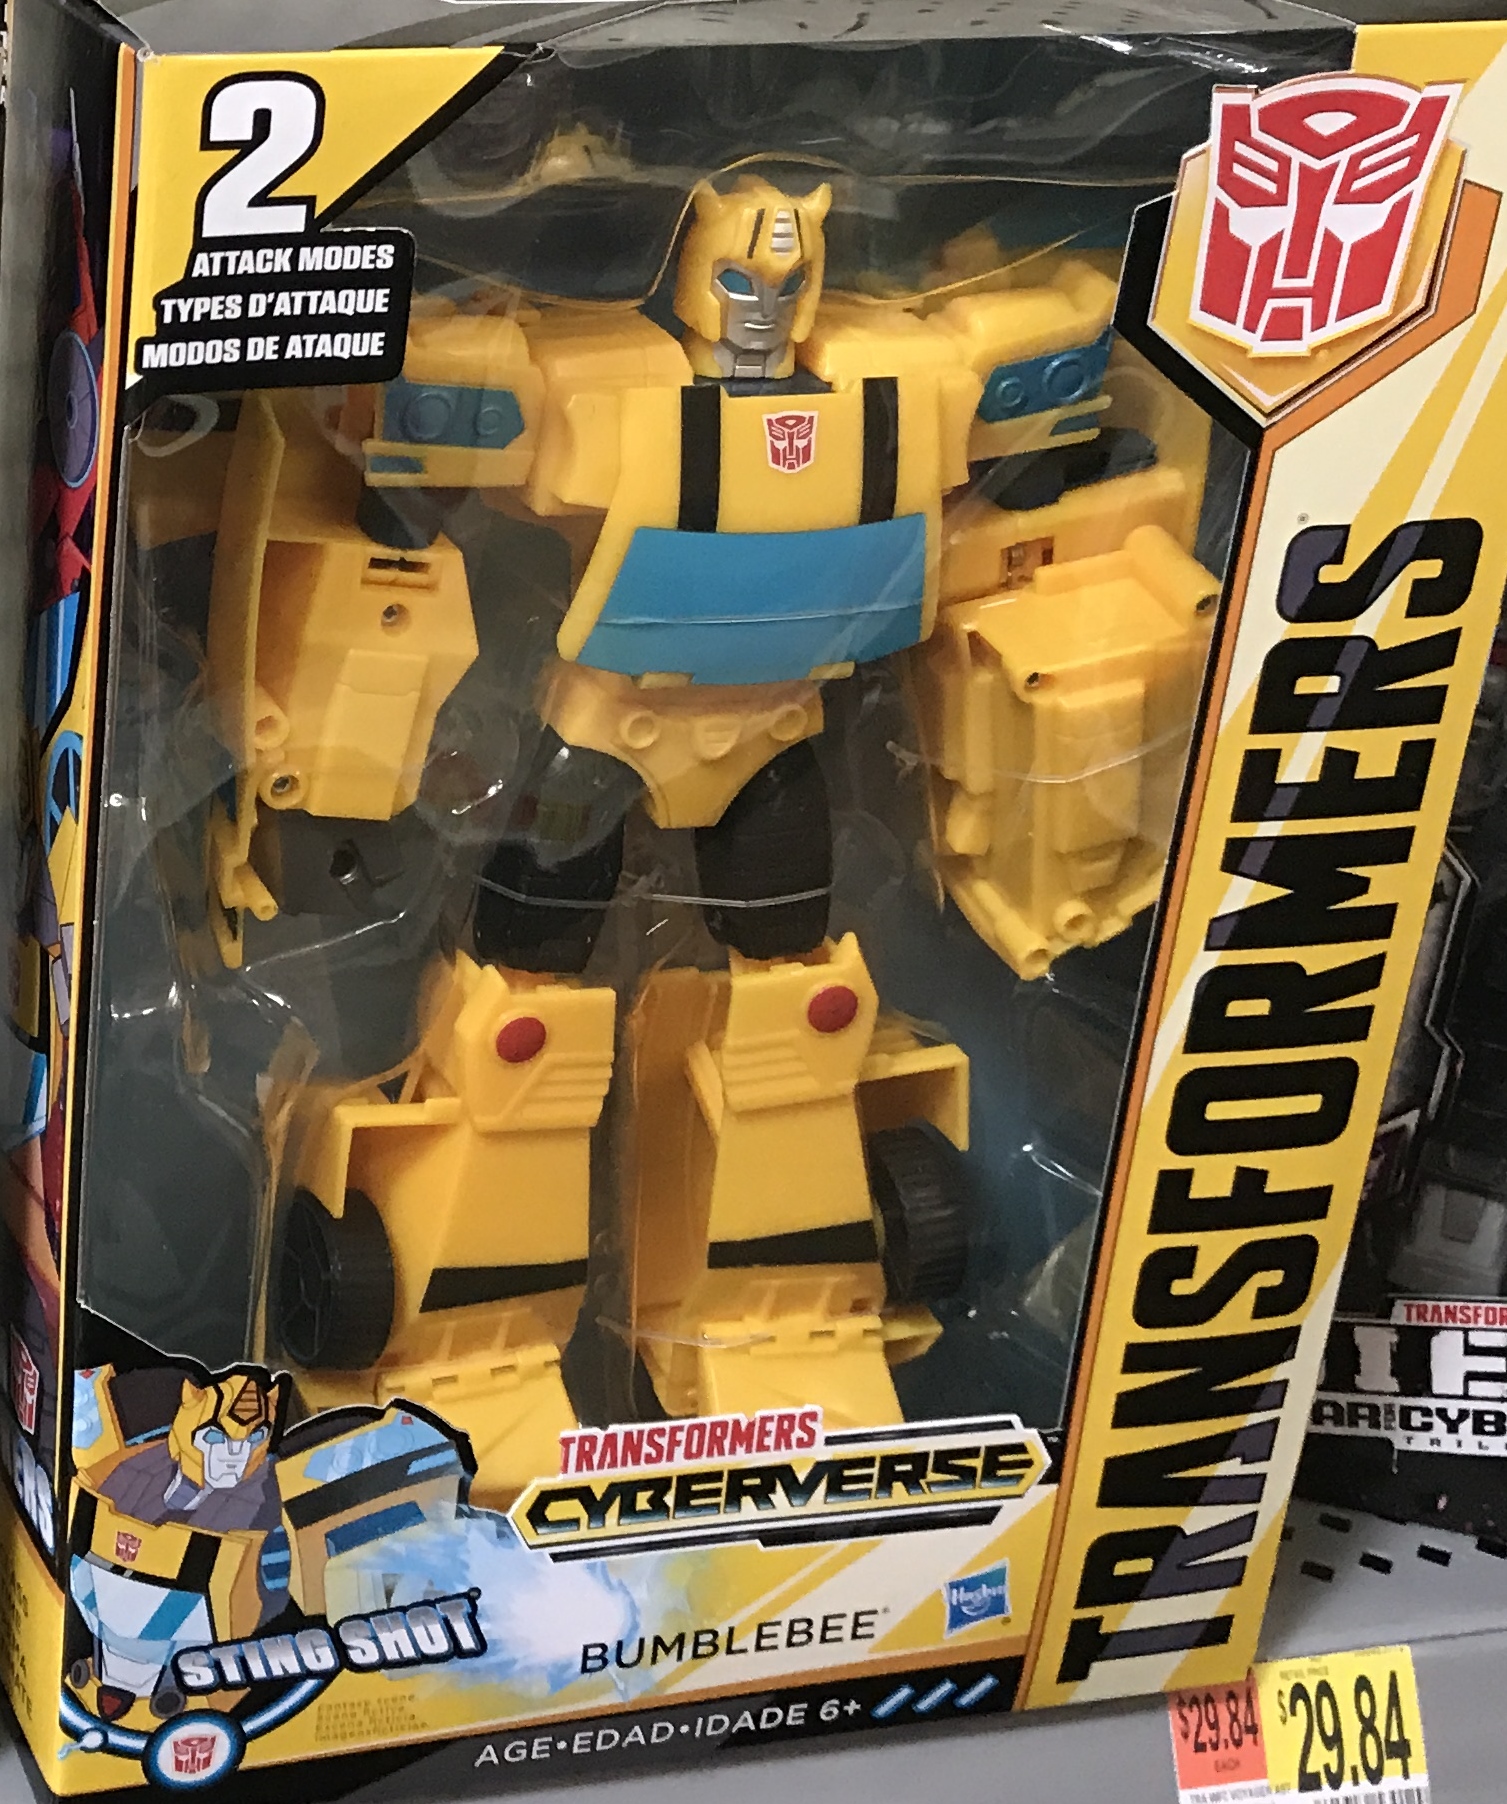 Transformers: Cyberverse Ultimate Bumblebee